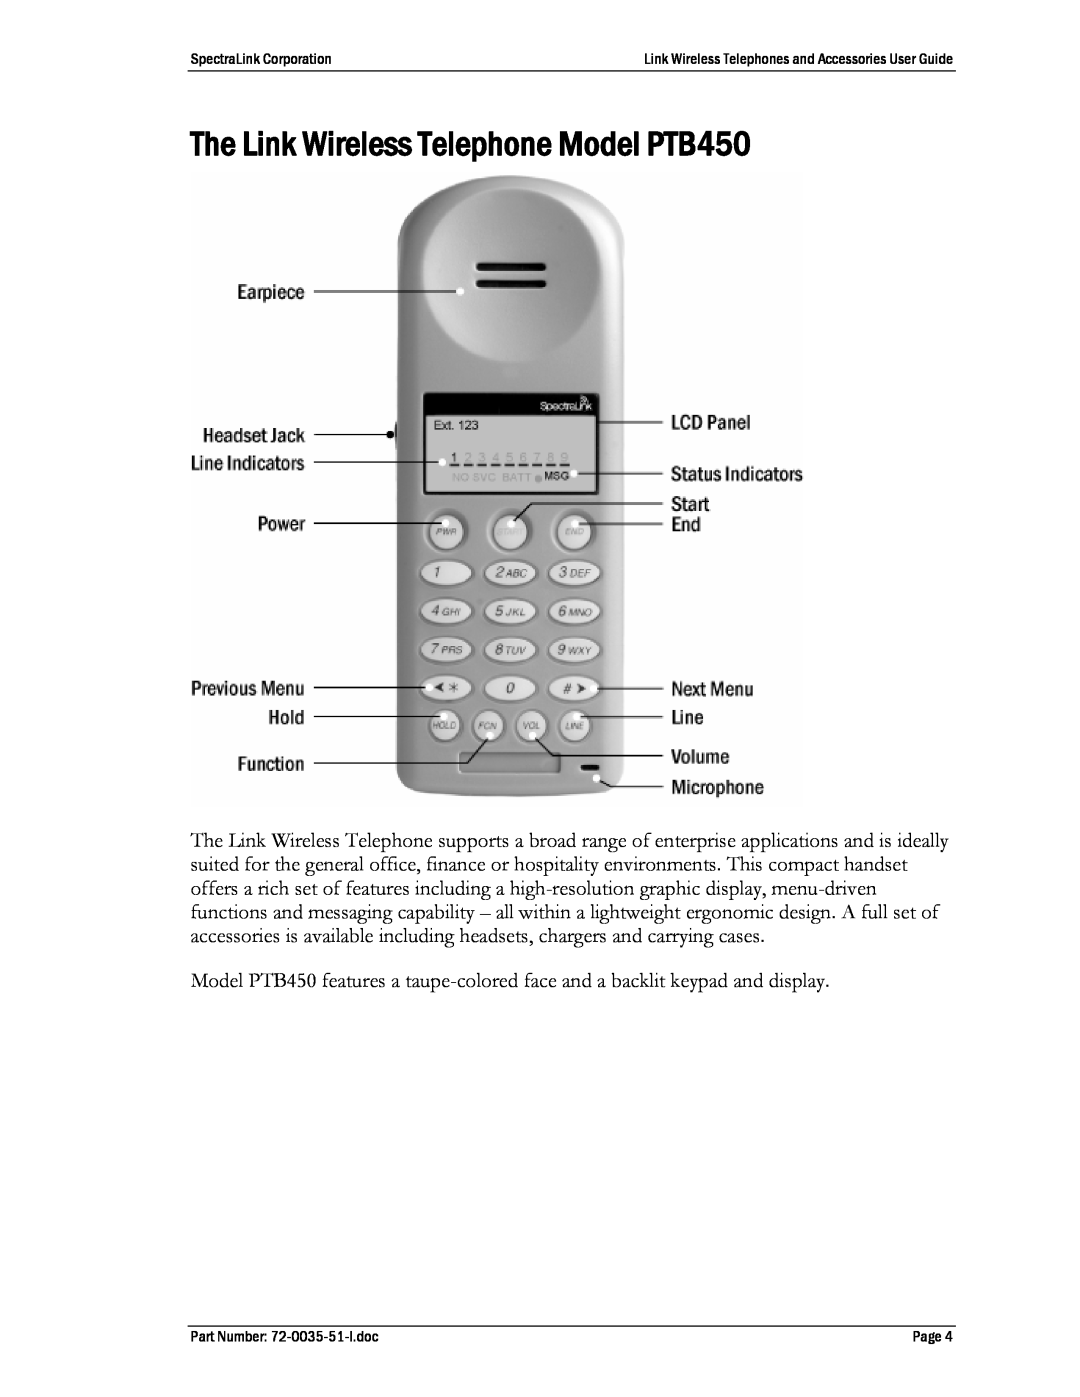 SpectraLink PTB400, 410 manual The Link Wireless Telephone Model PTB450 